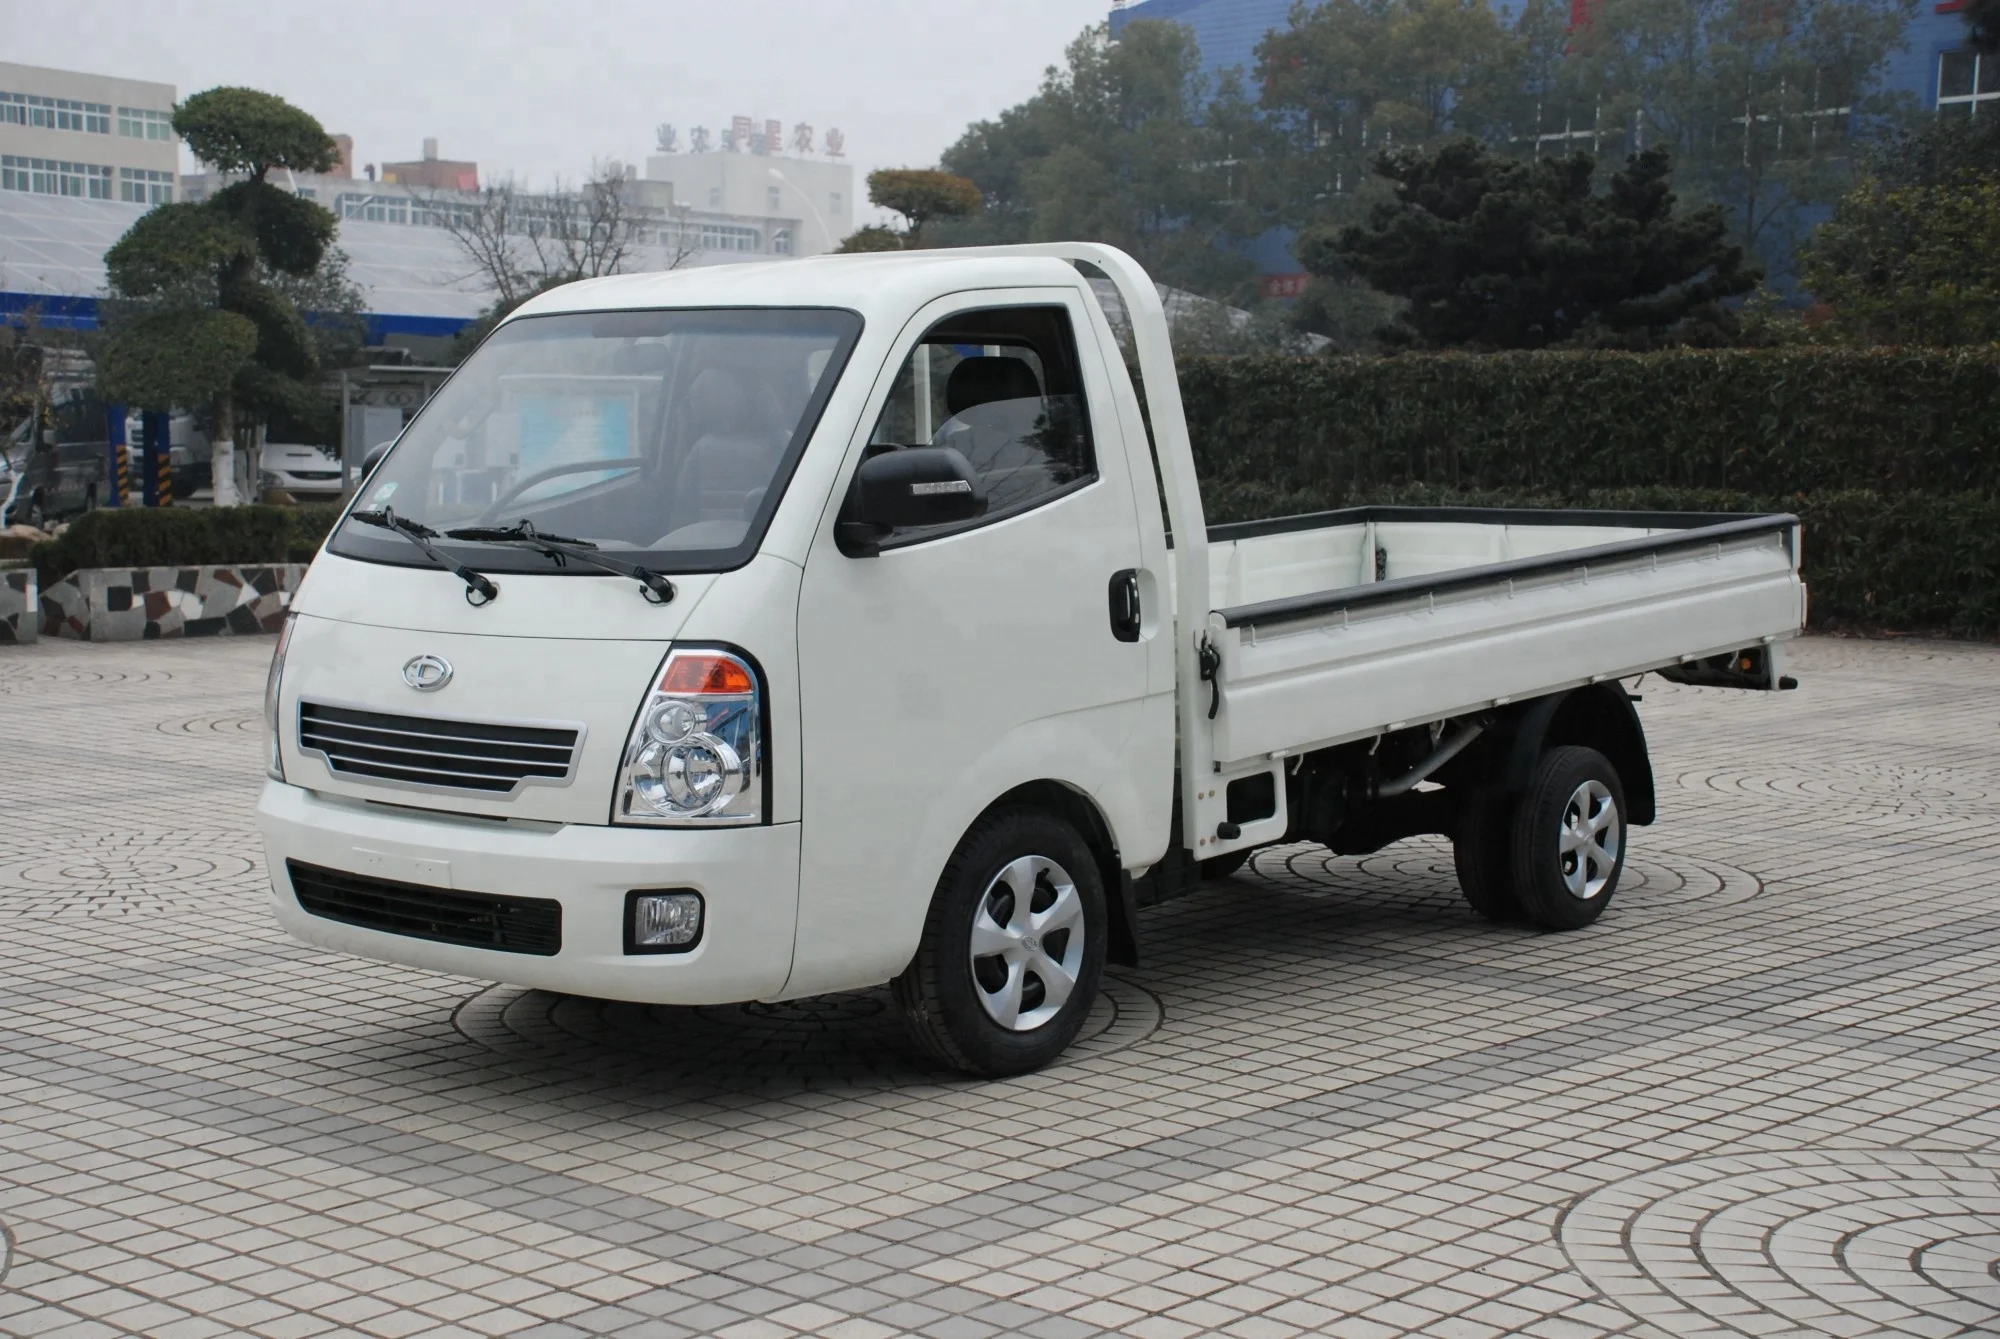 Купить японский грузовик до 3. Китайские мини грузовик hi1345g. Мини грузовик ФАВ 1.5Т. Китайские Грузовики до 1.5 тонн 4х4 стелс. Грузовик FAW 1,5 1.5 тонны.